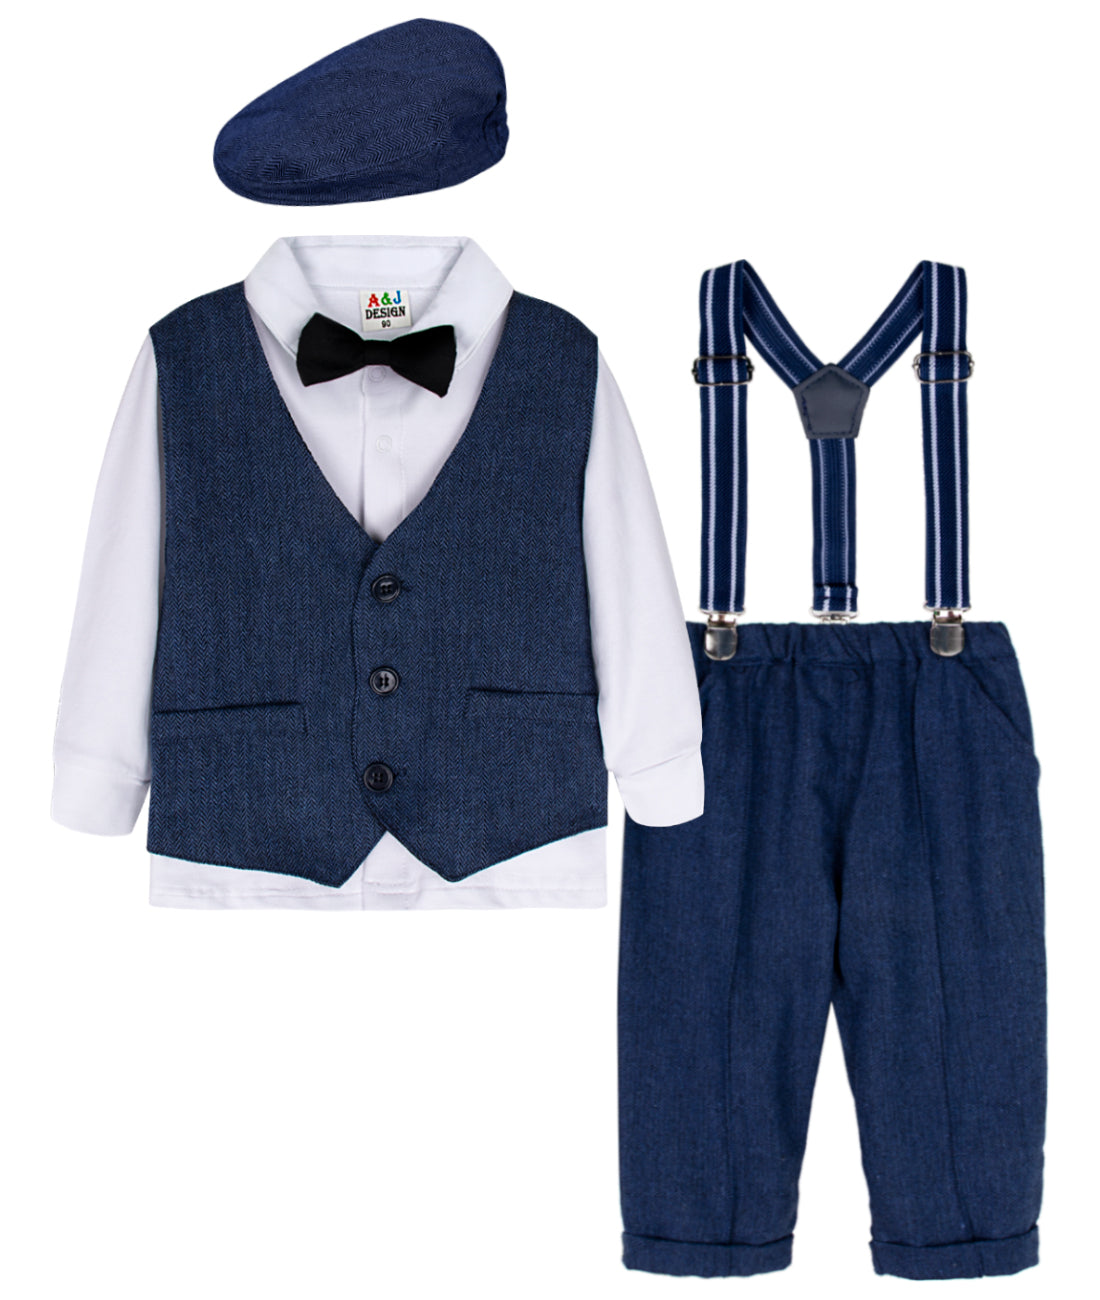 British style Little-Man suit